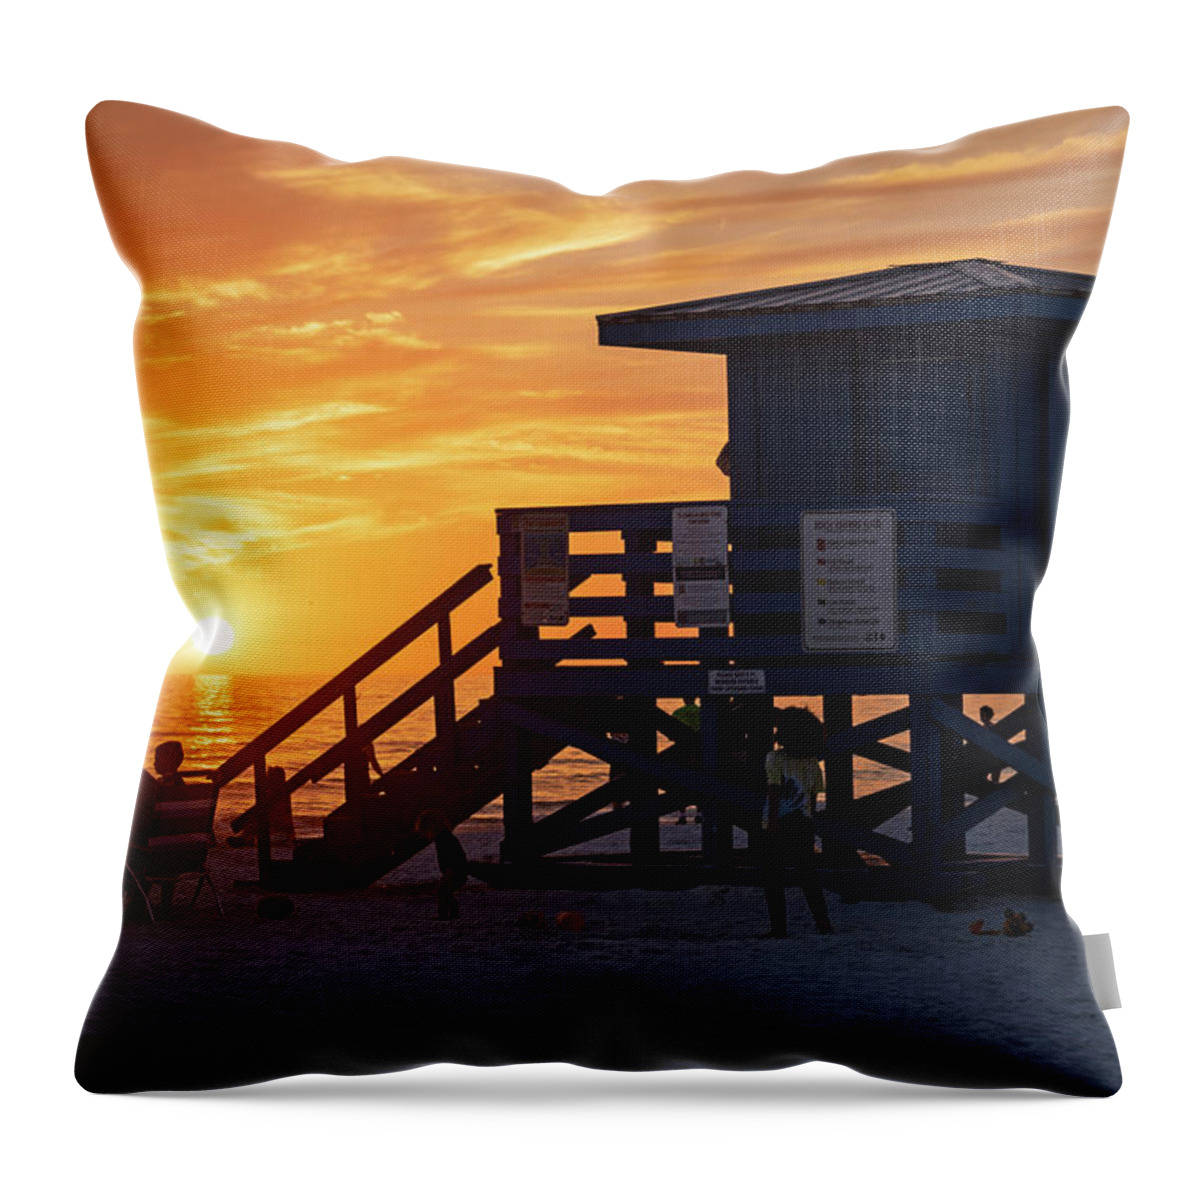 Siesta Throw Pillow featuring the photograph Siesta Key Beach Sunset Sarasota Florida Lifeguard House by Toby McGuire